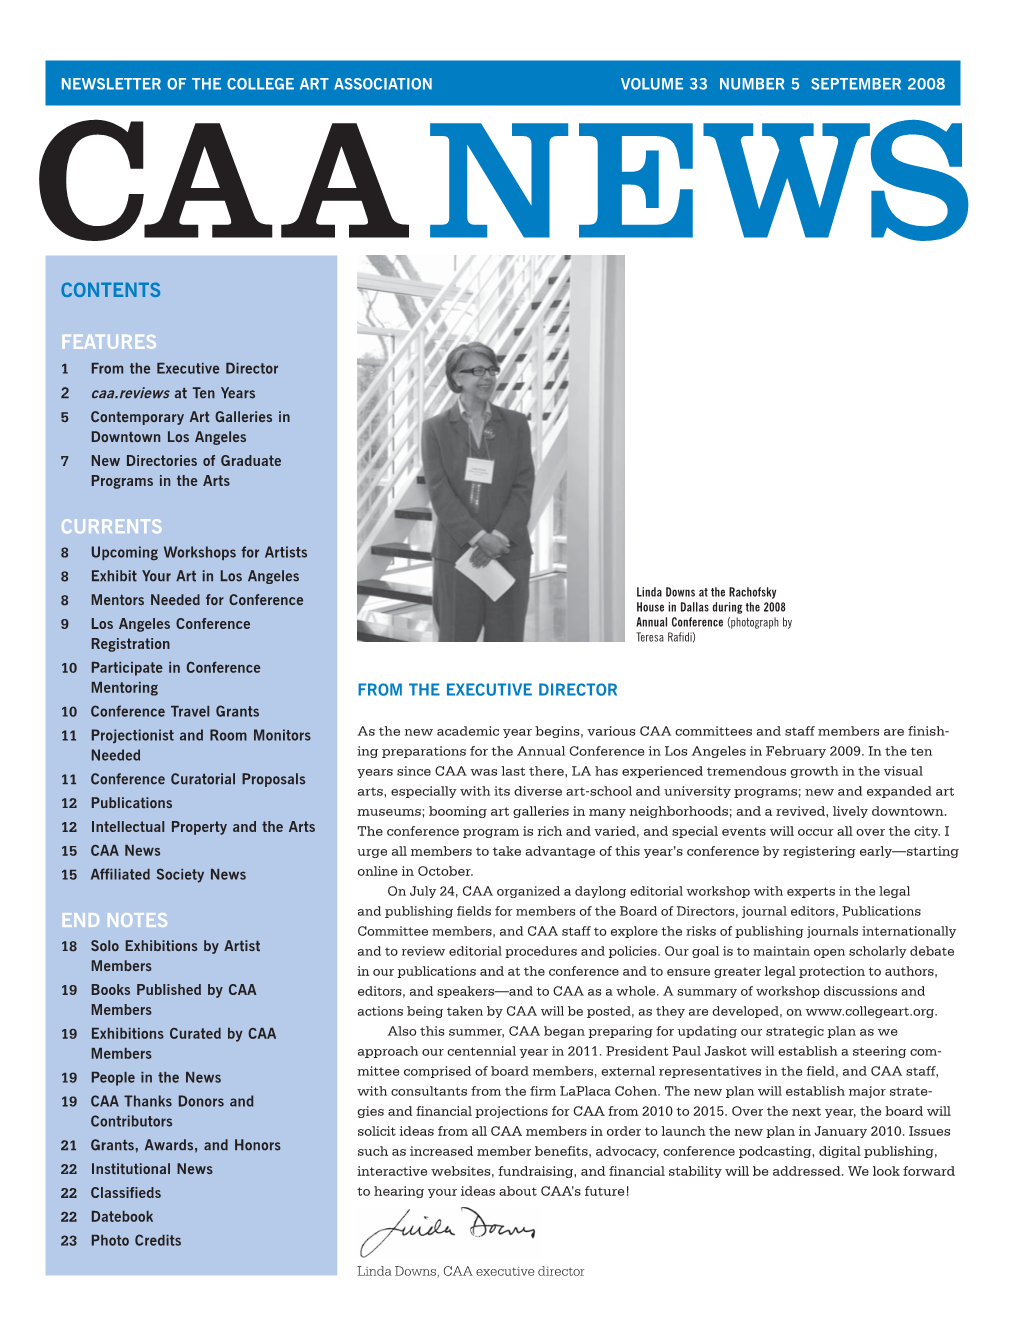 September 2008 Caa News Contents